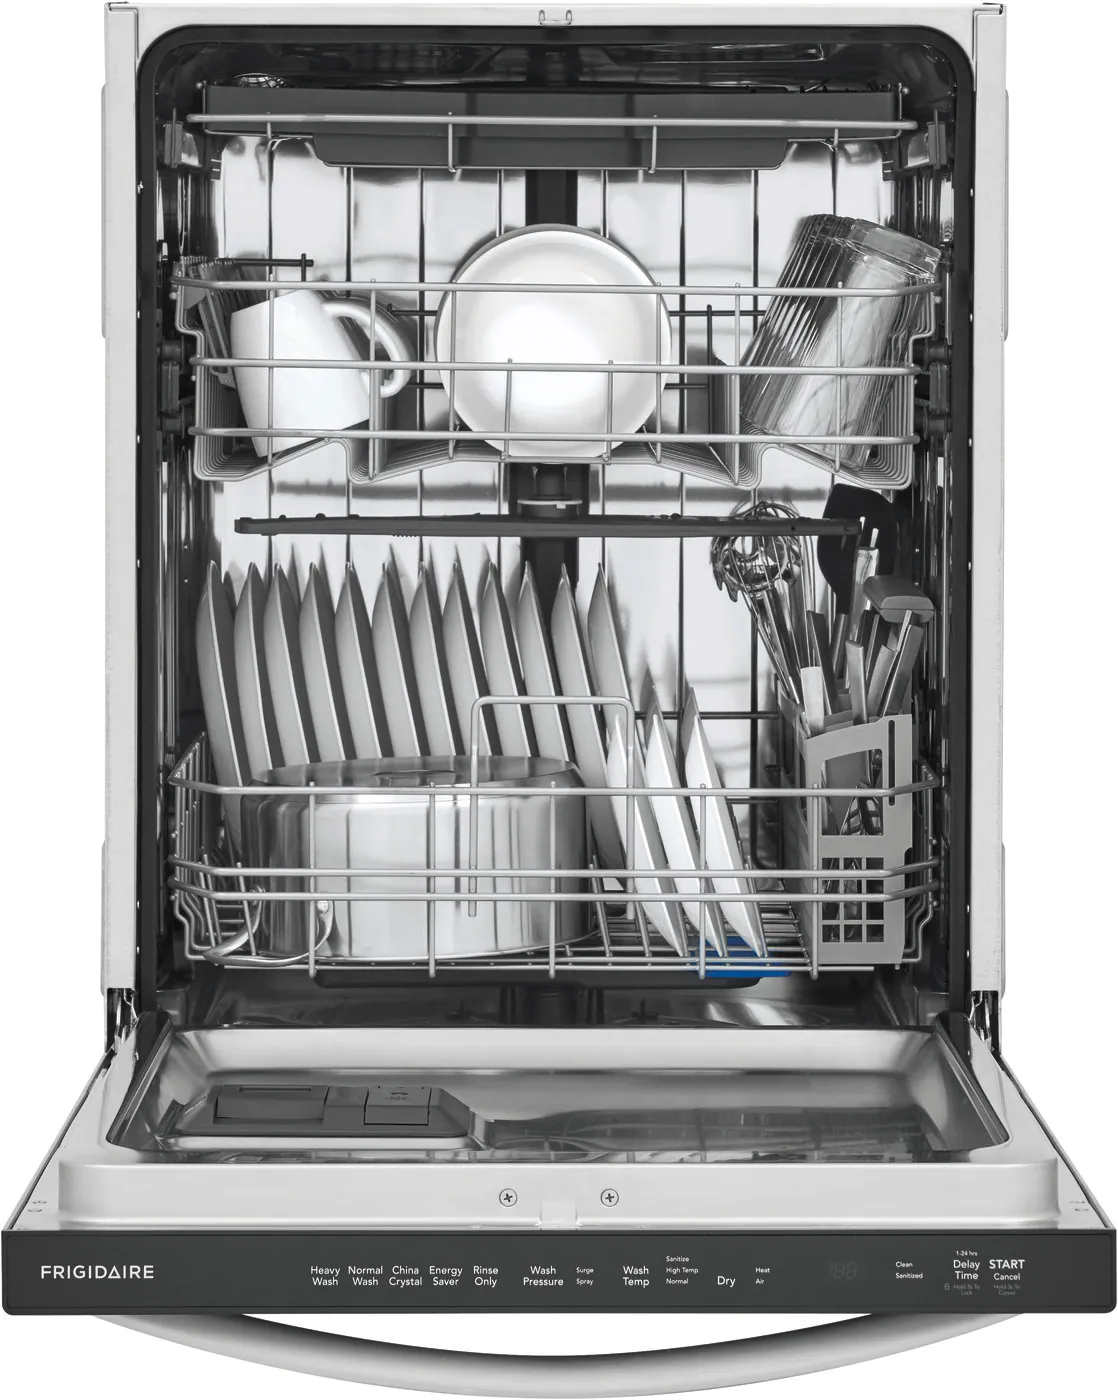 How To Start Frigidaire Dishwasher